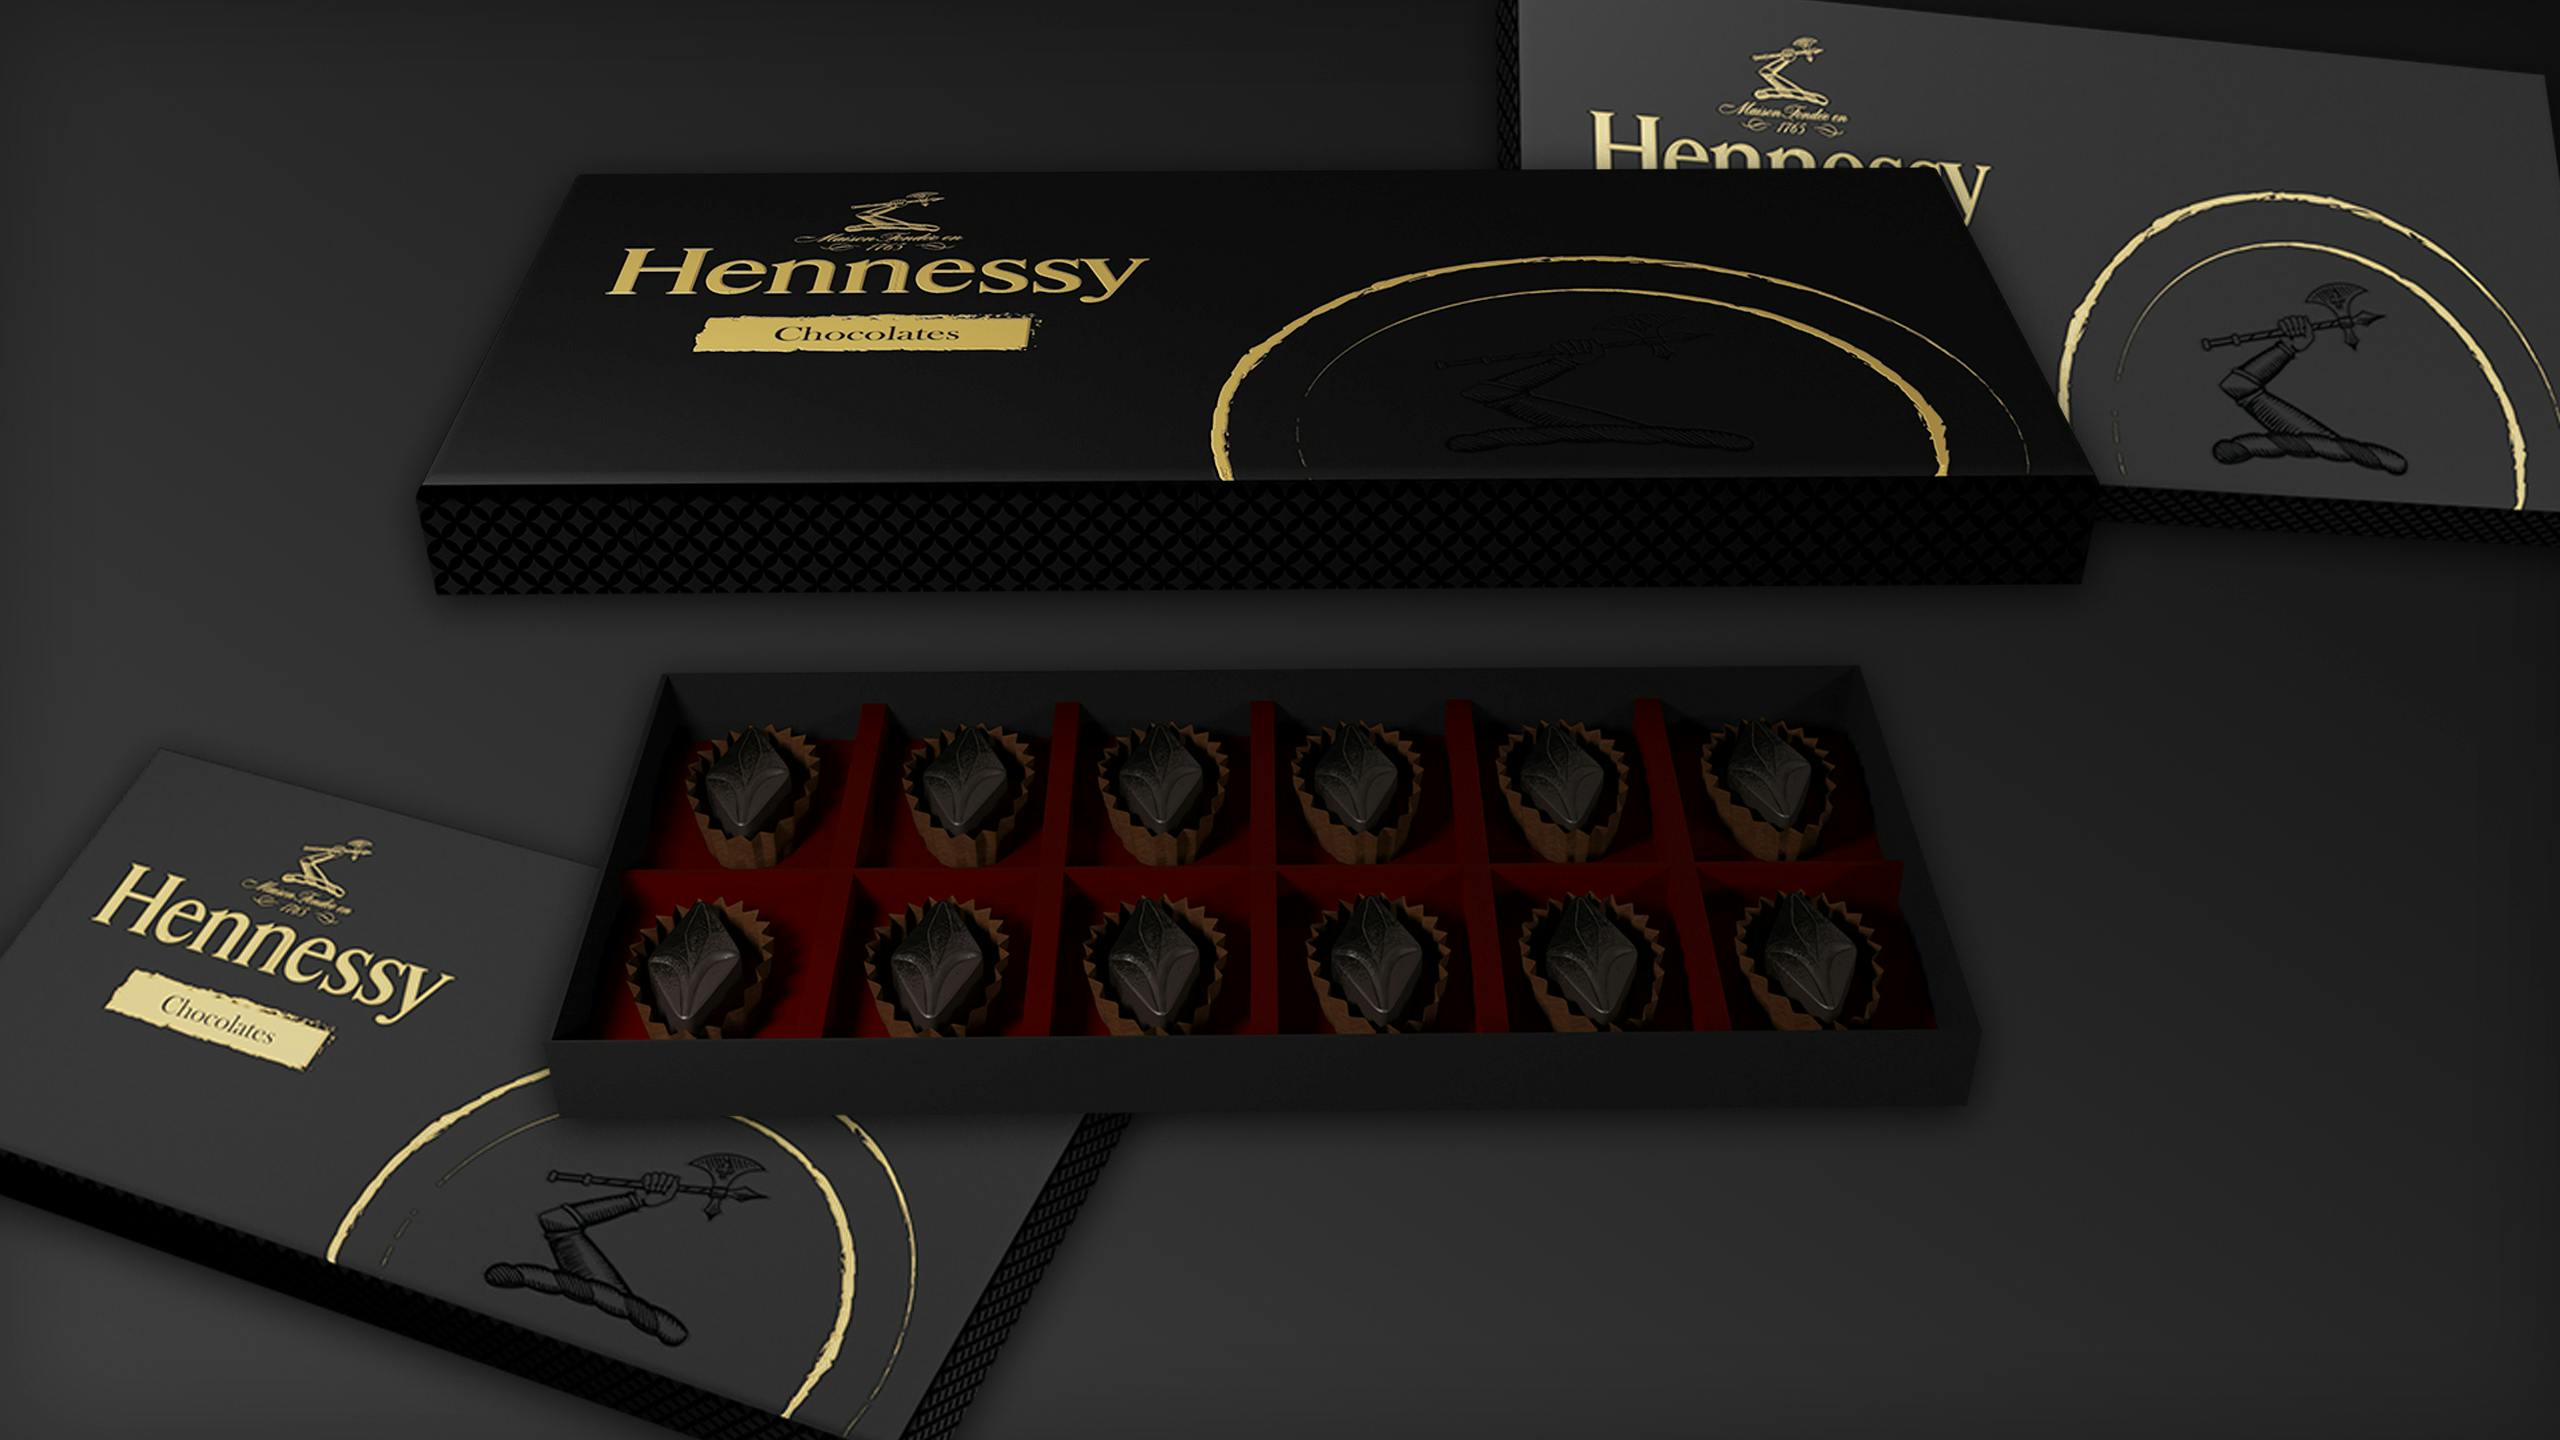 Hennessy chocolates concept artwork